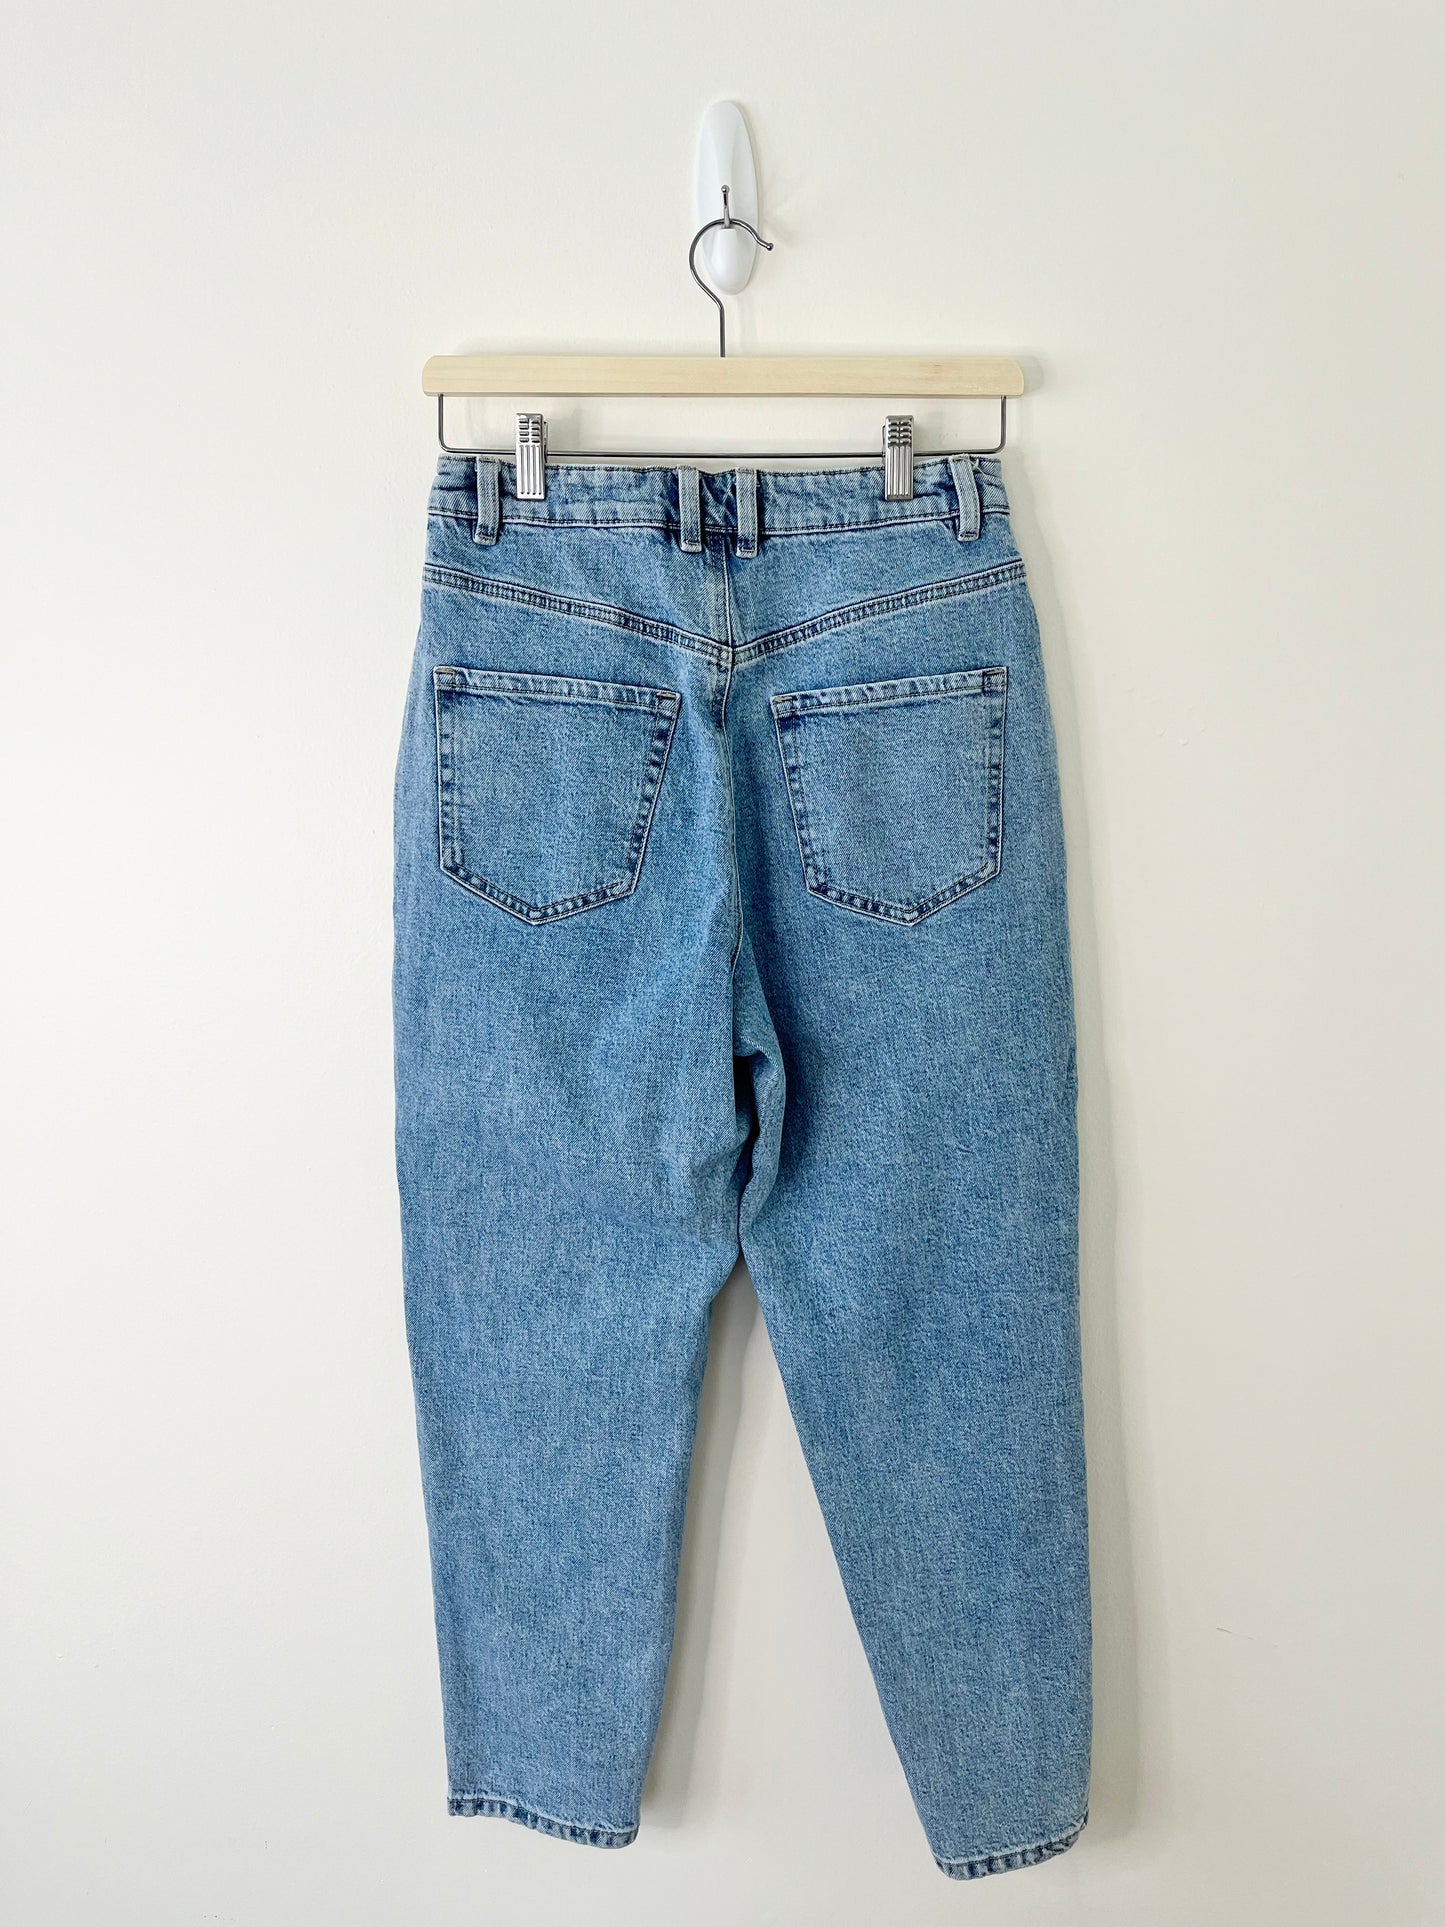 Mom Jeans (13.5" across waist)